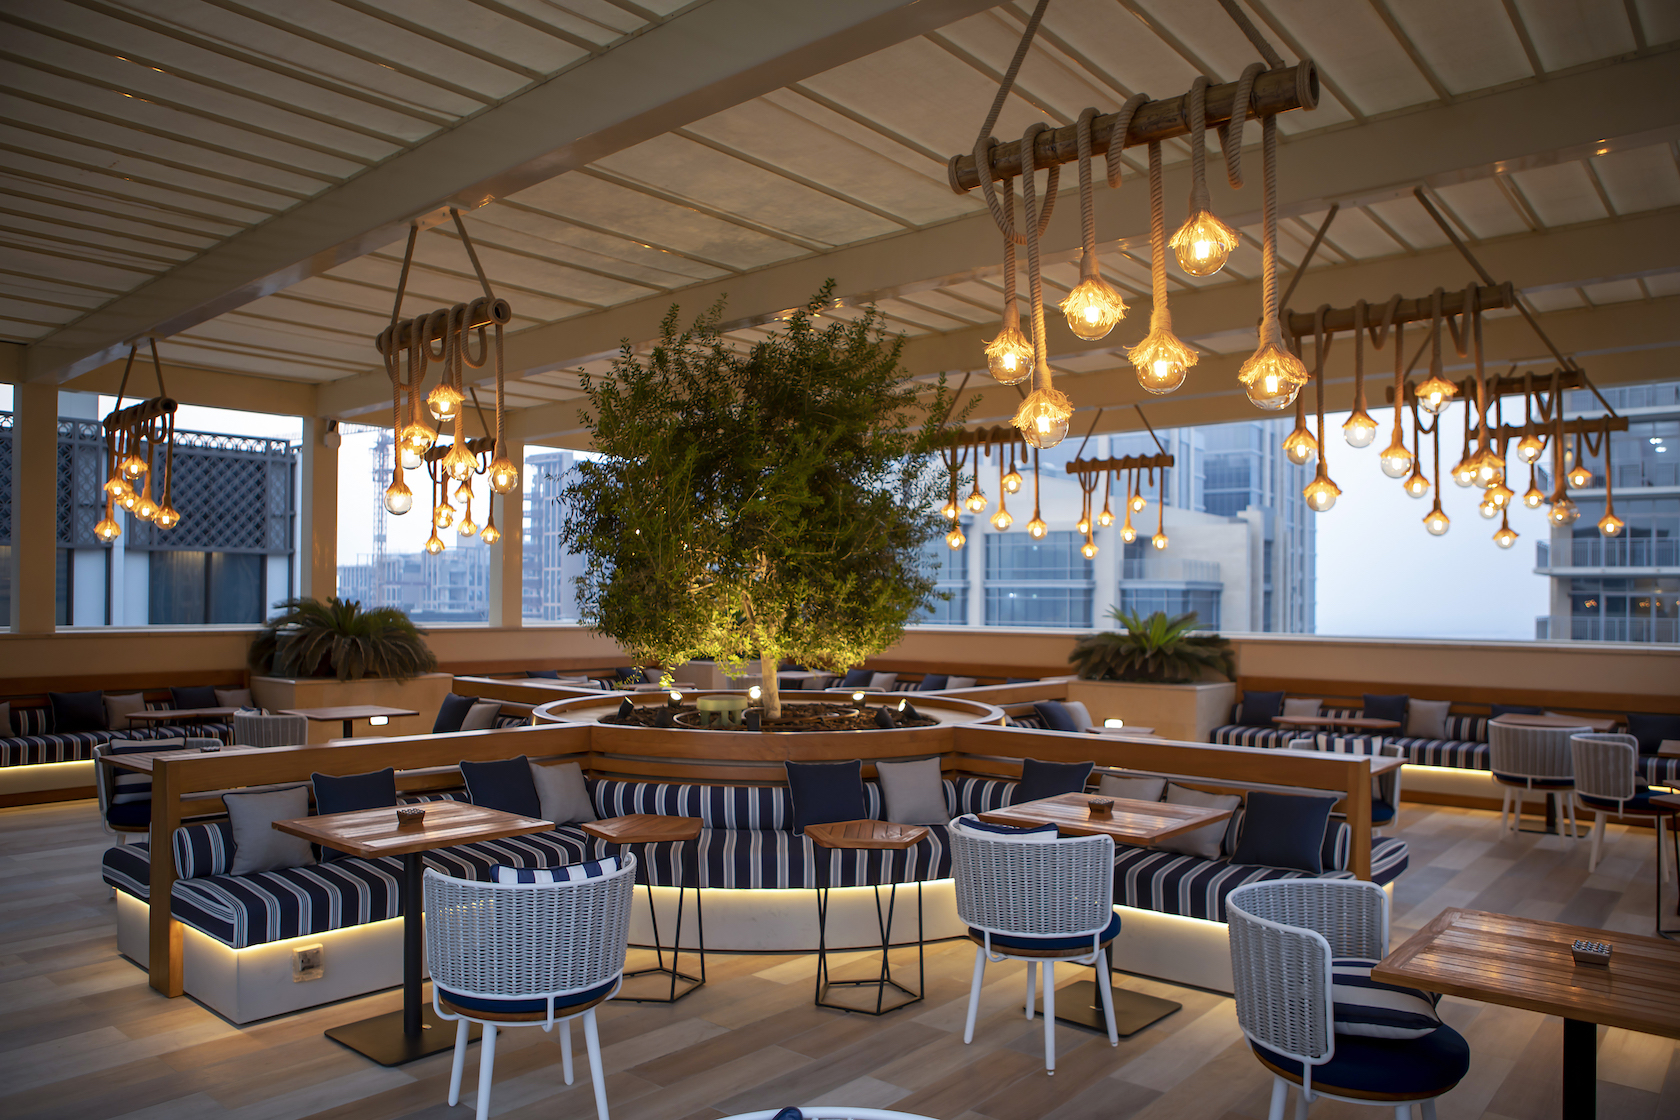 فندق دايز باي ويندام ديرة يعيد إفتتاح مطعميه إل بومودورو و إسبيريا